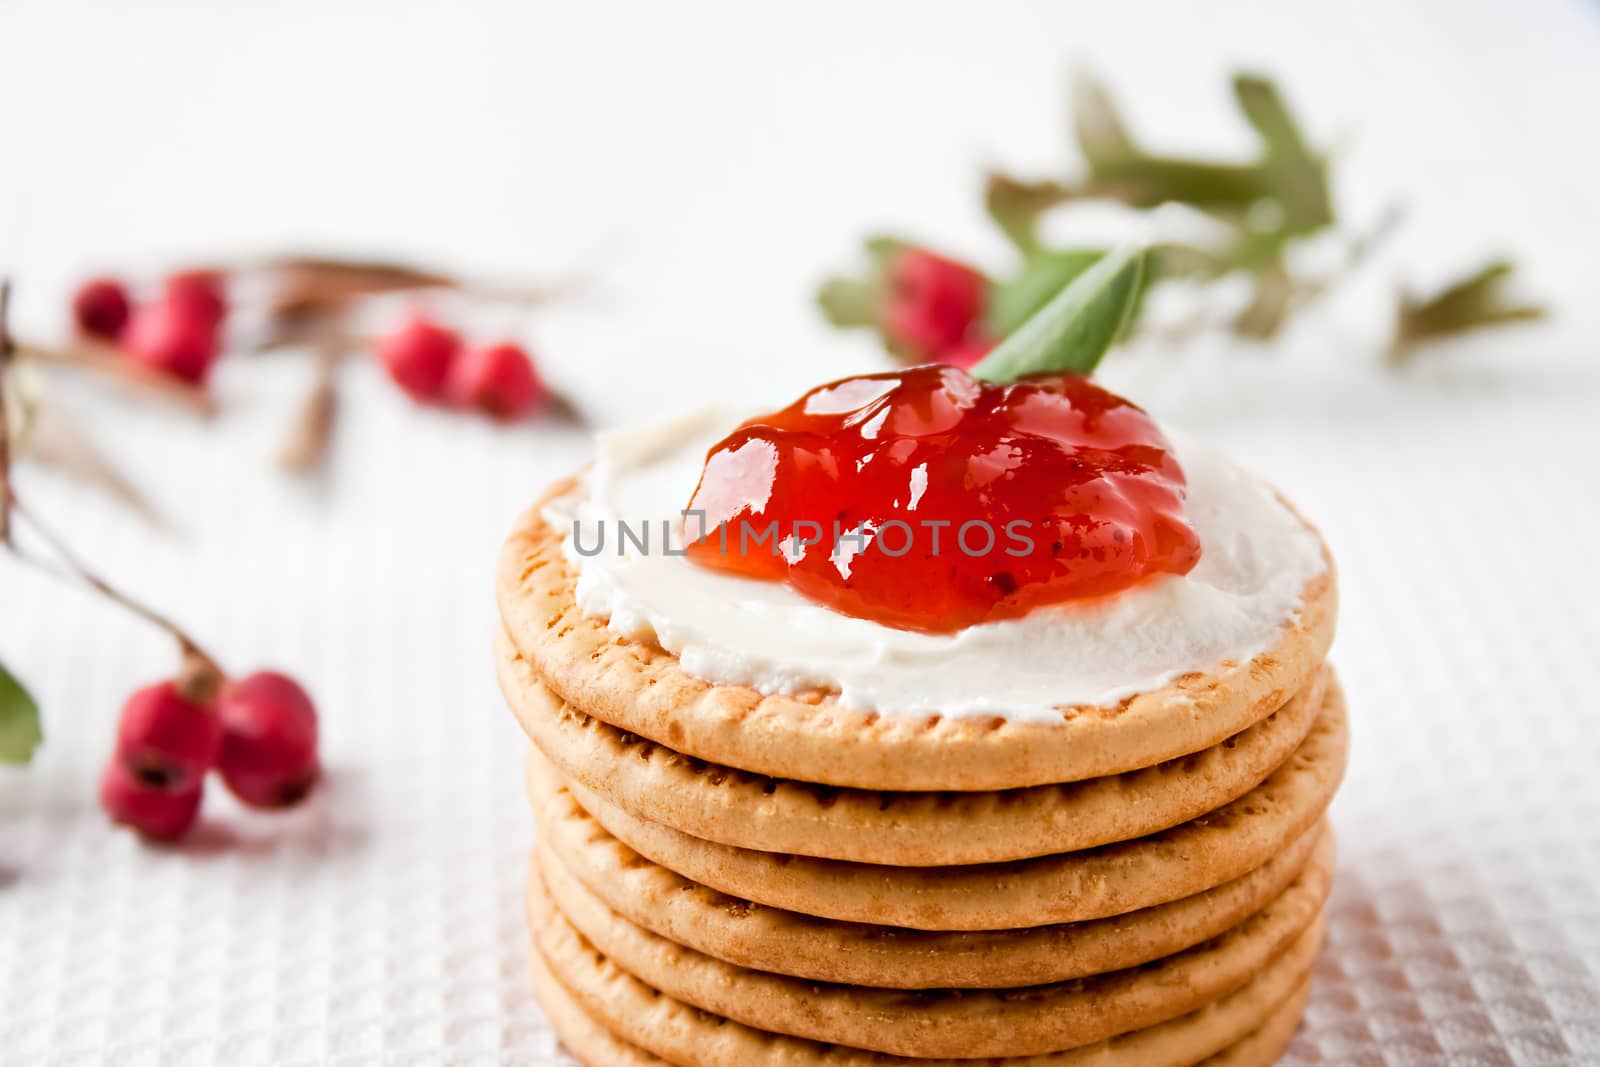 Cookies with cream cheese, strawberry jam and cranberries around